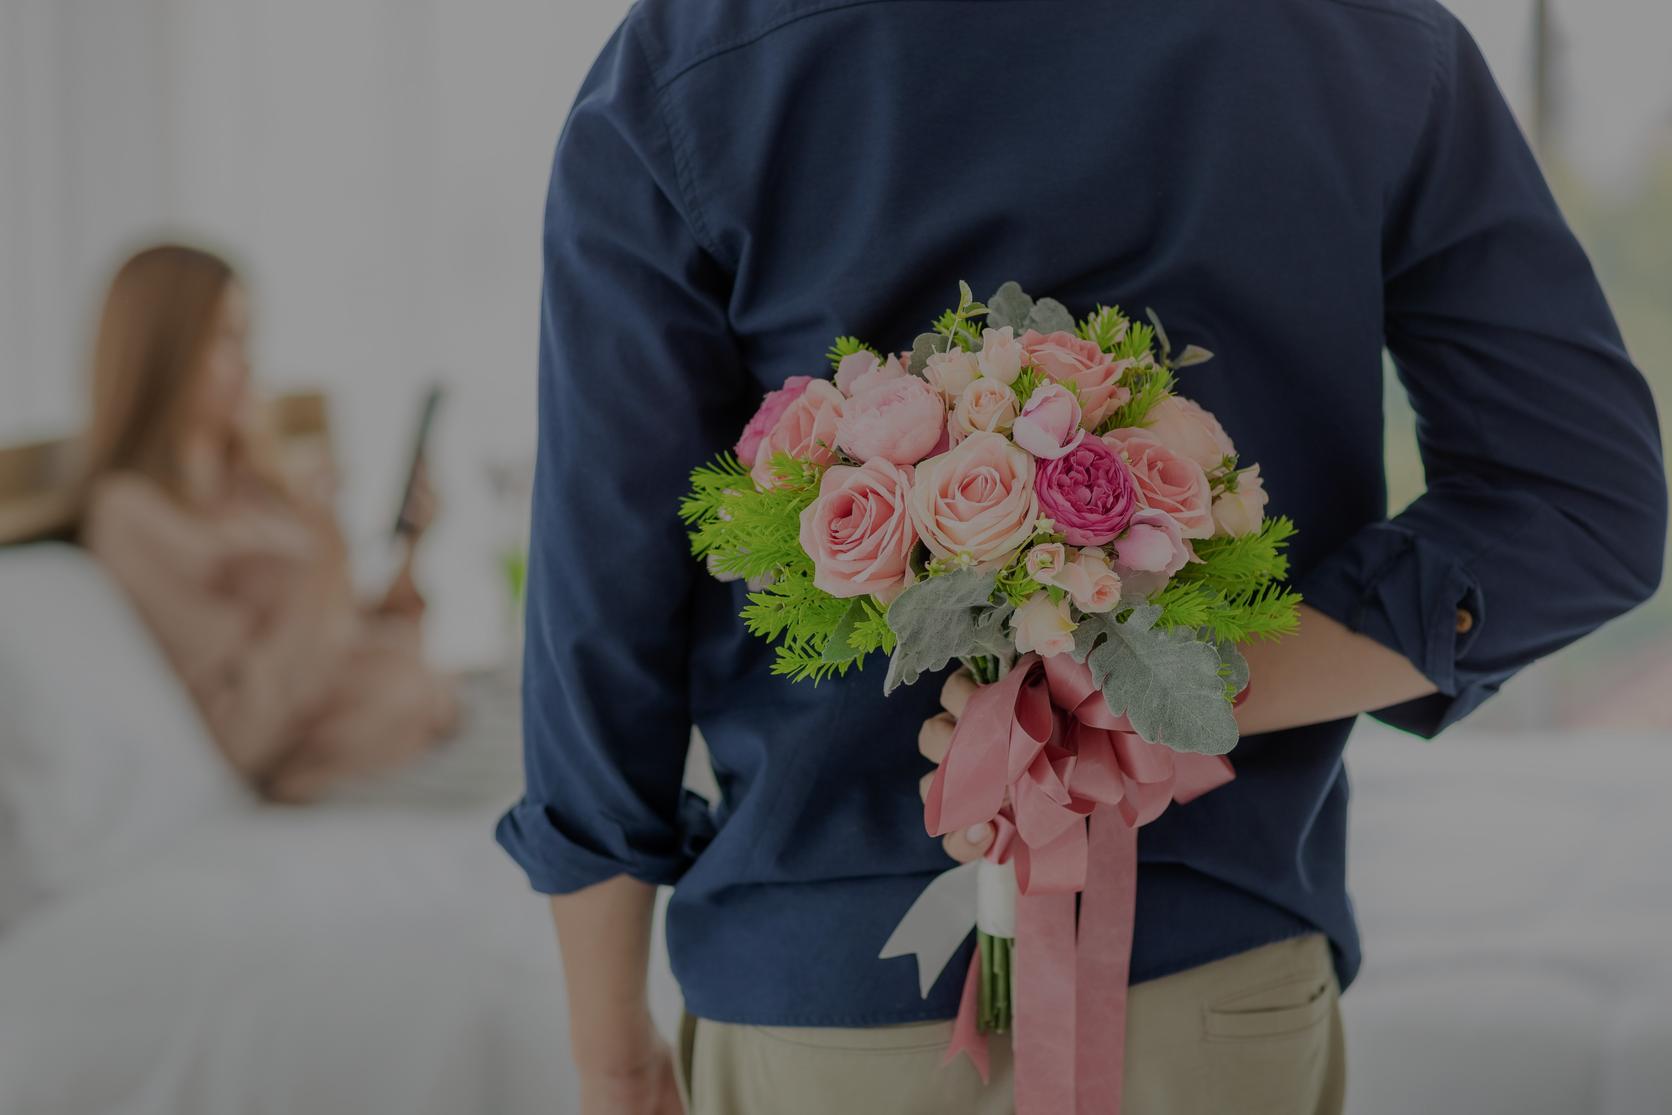 Wedding Anniversary Flowers Delivered - Appleyard